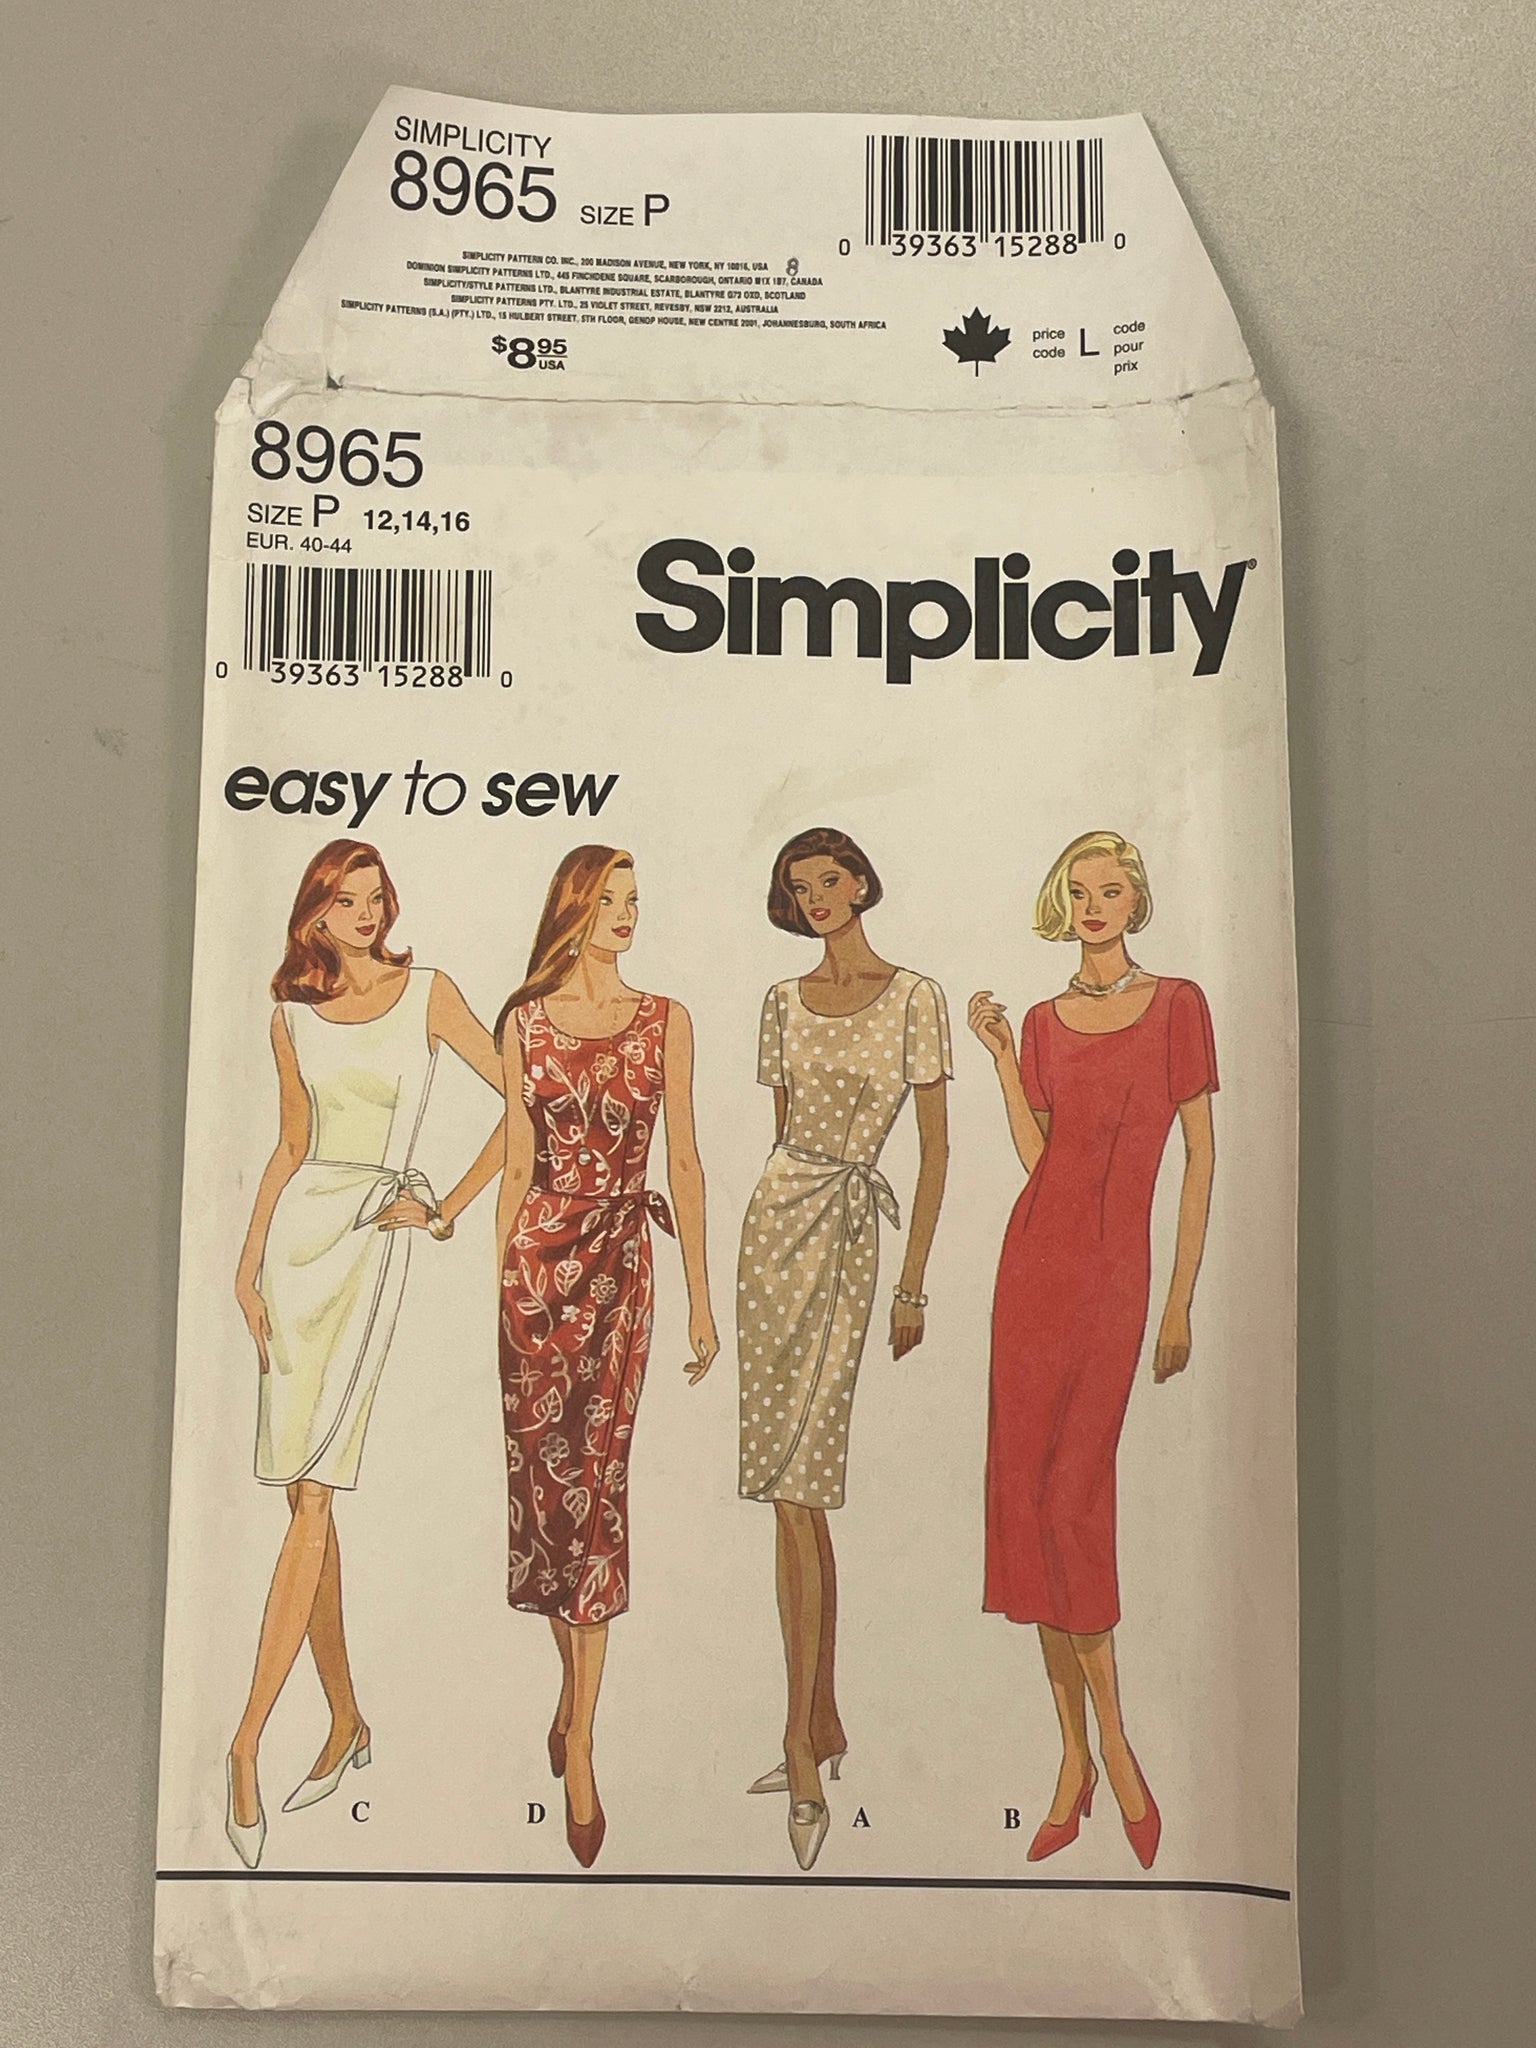 SALE 1994 Simplicity 8965 Pattern - Dress FACTORY FOLDED